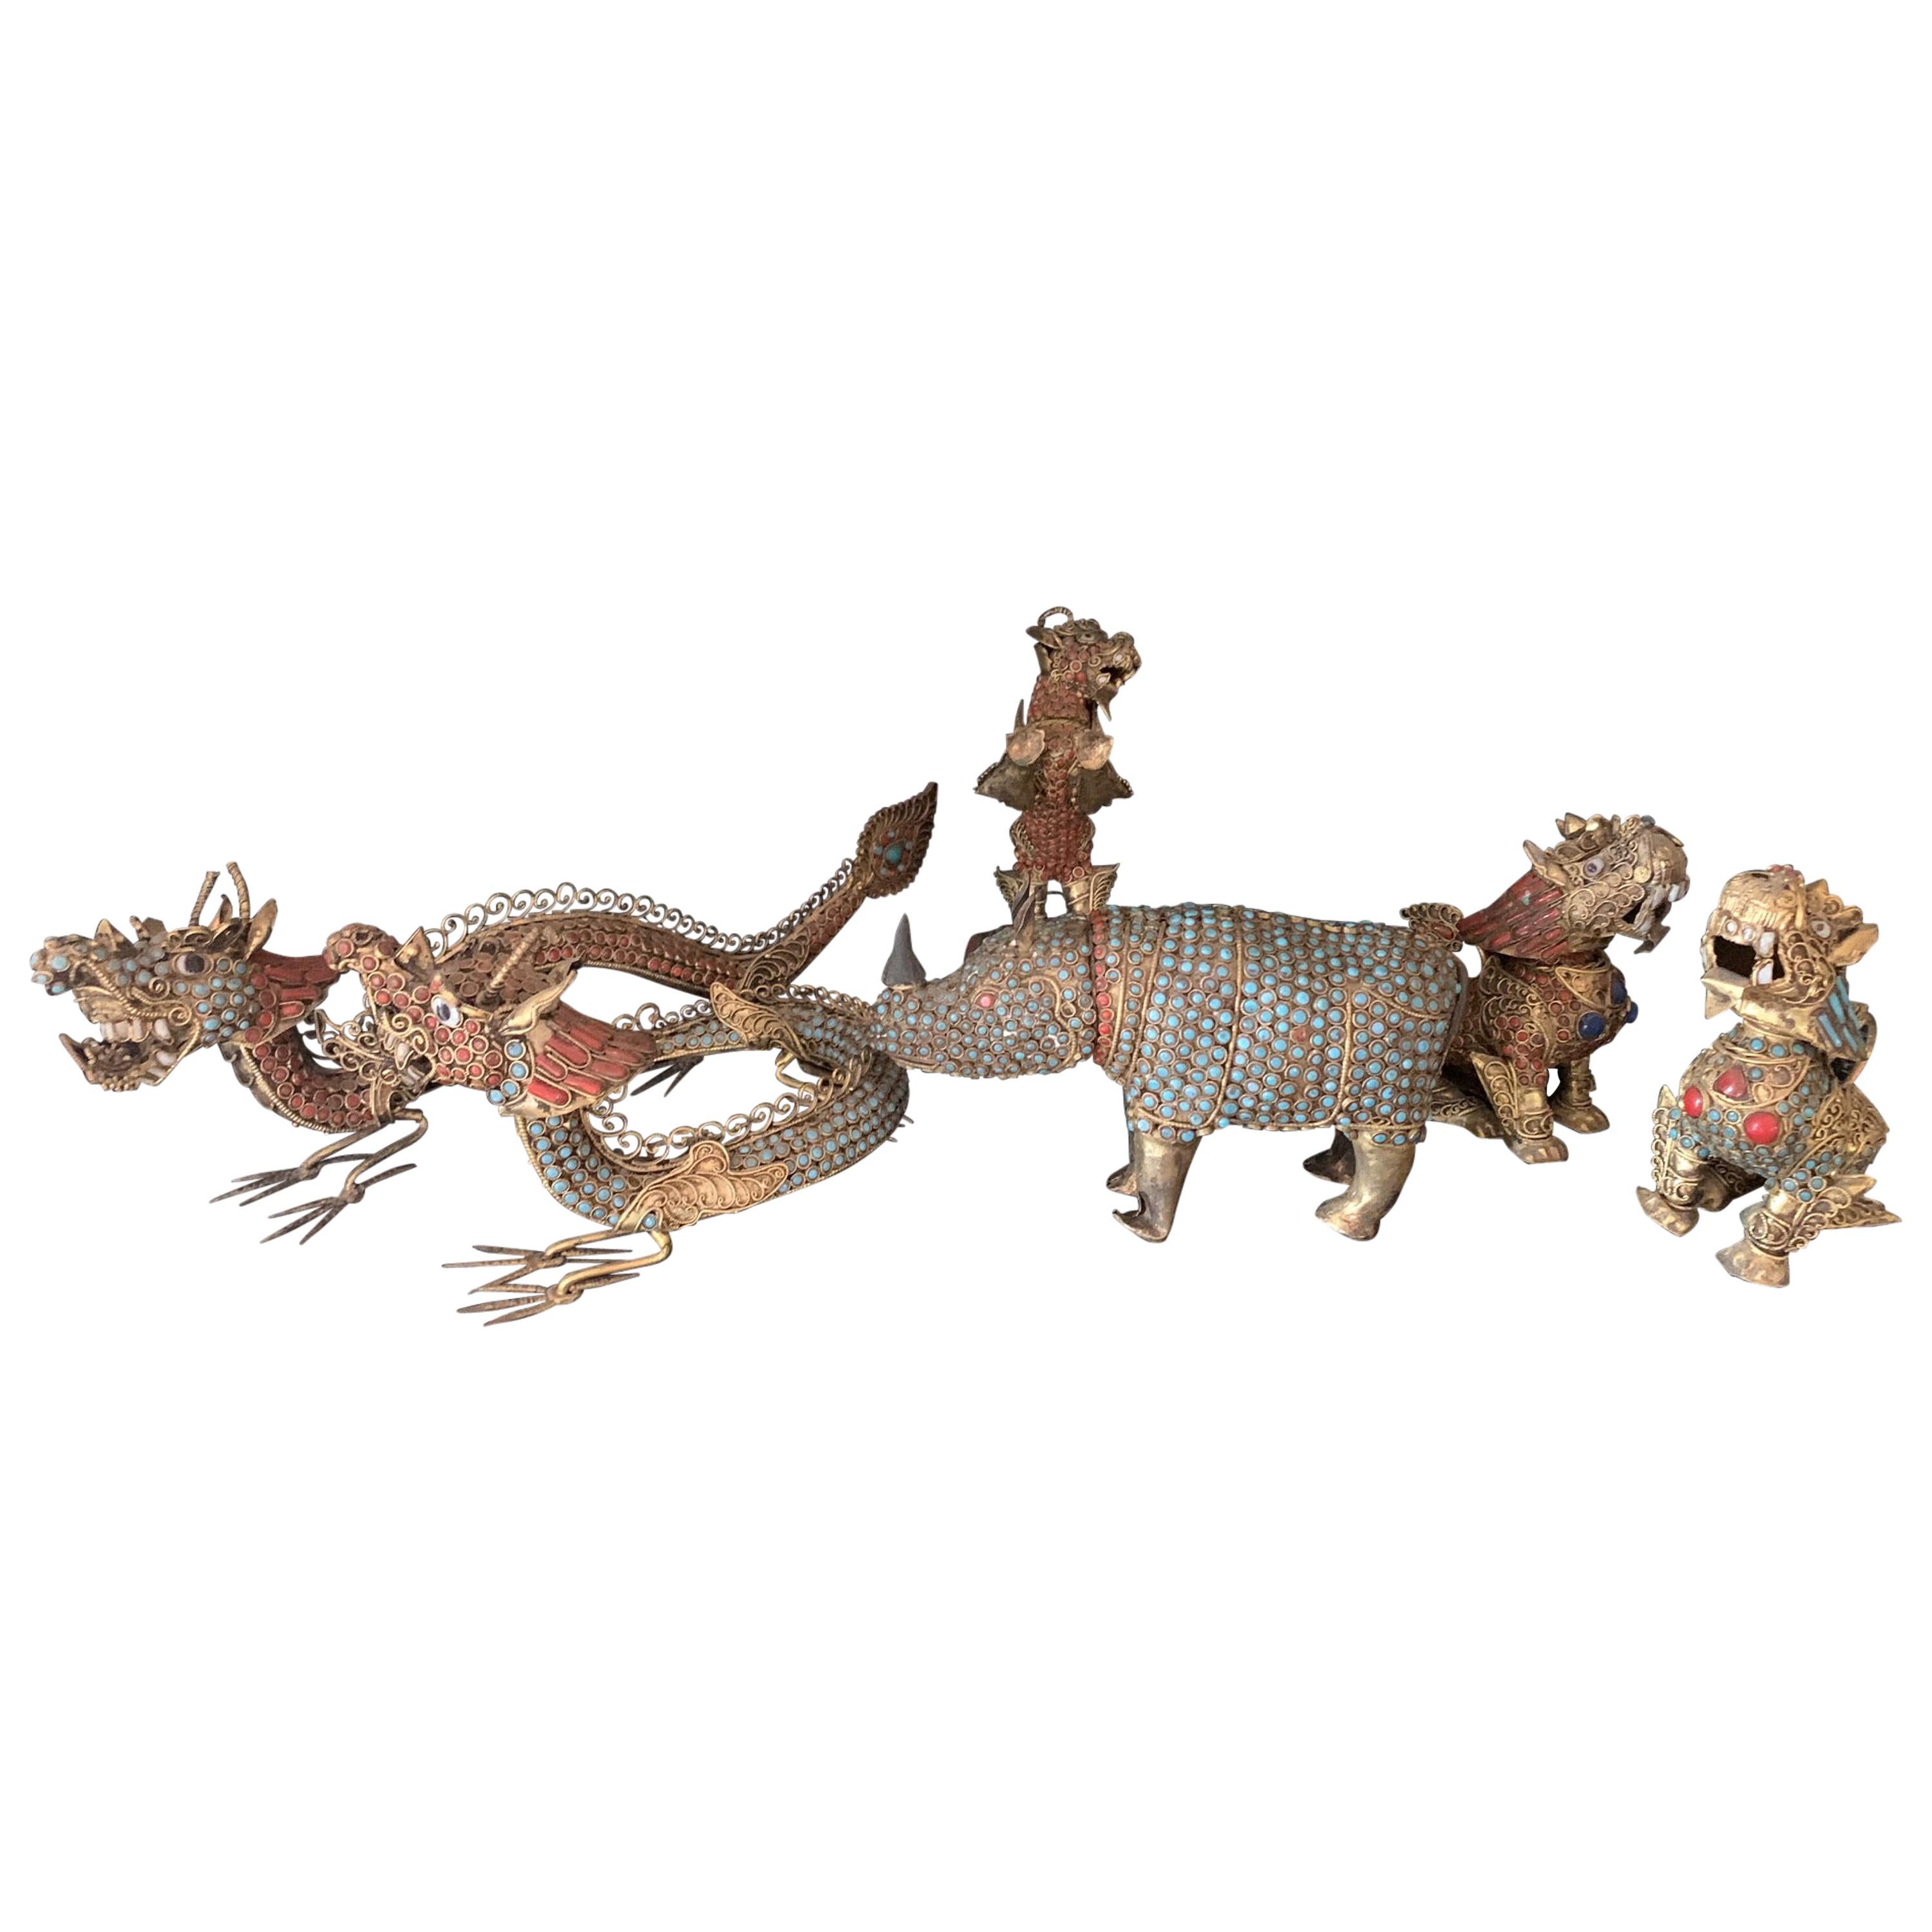 Group of Brass Filigree Animal Figures with Stone Inlays Himalayan Region